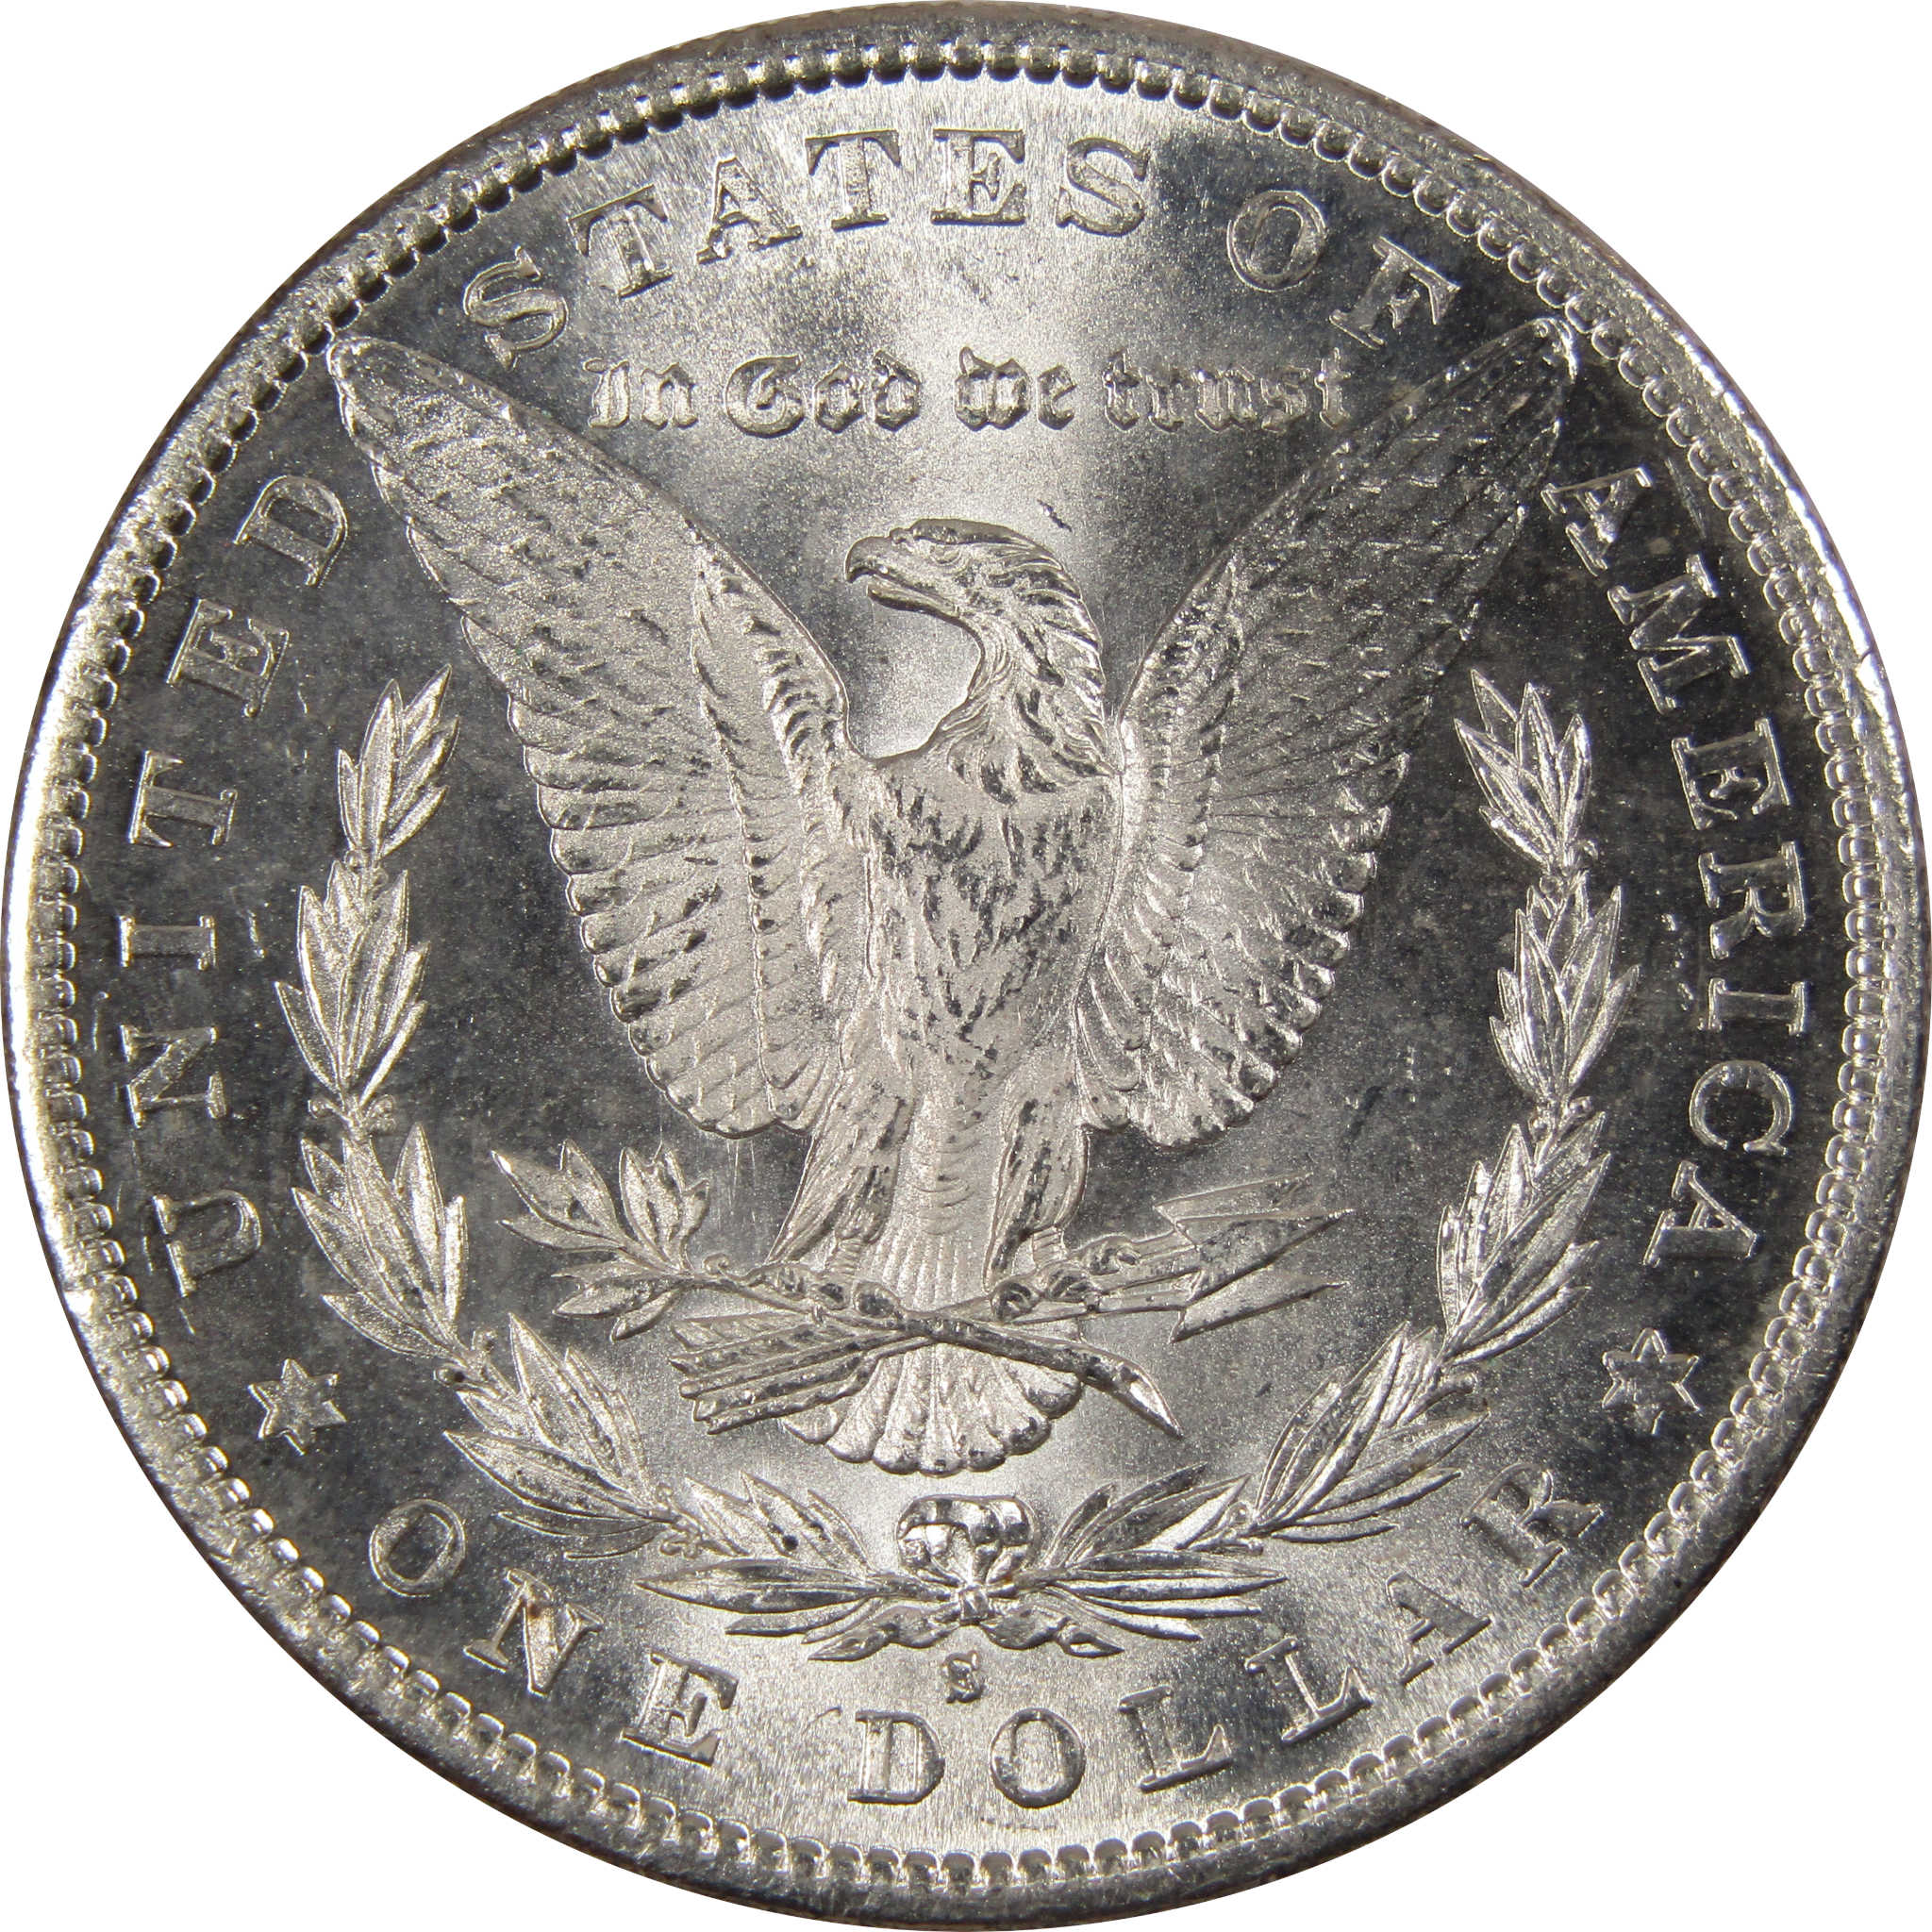 1881 S Morgan Dollar BU Very Choice Uncirculated Silver SKU:IPC7033 - Morgan coin - Morgan silver dollar - Morgan silver dollar for sale - Profile Coins &amp; Collectibles